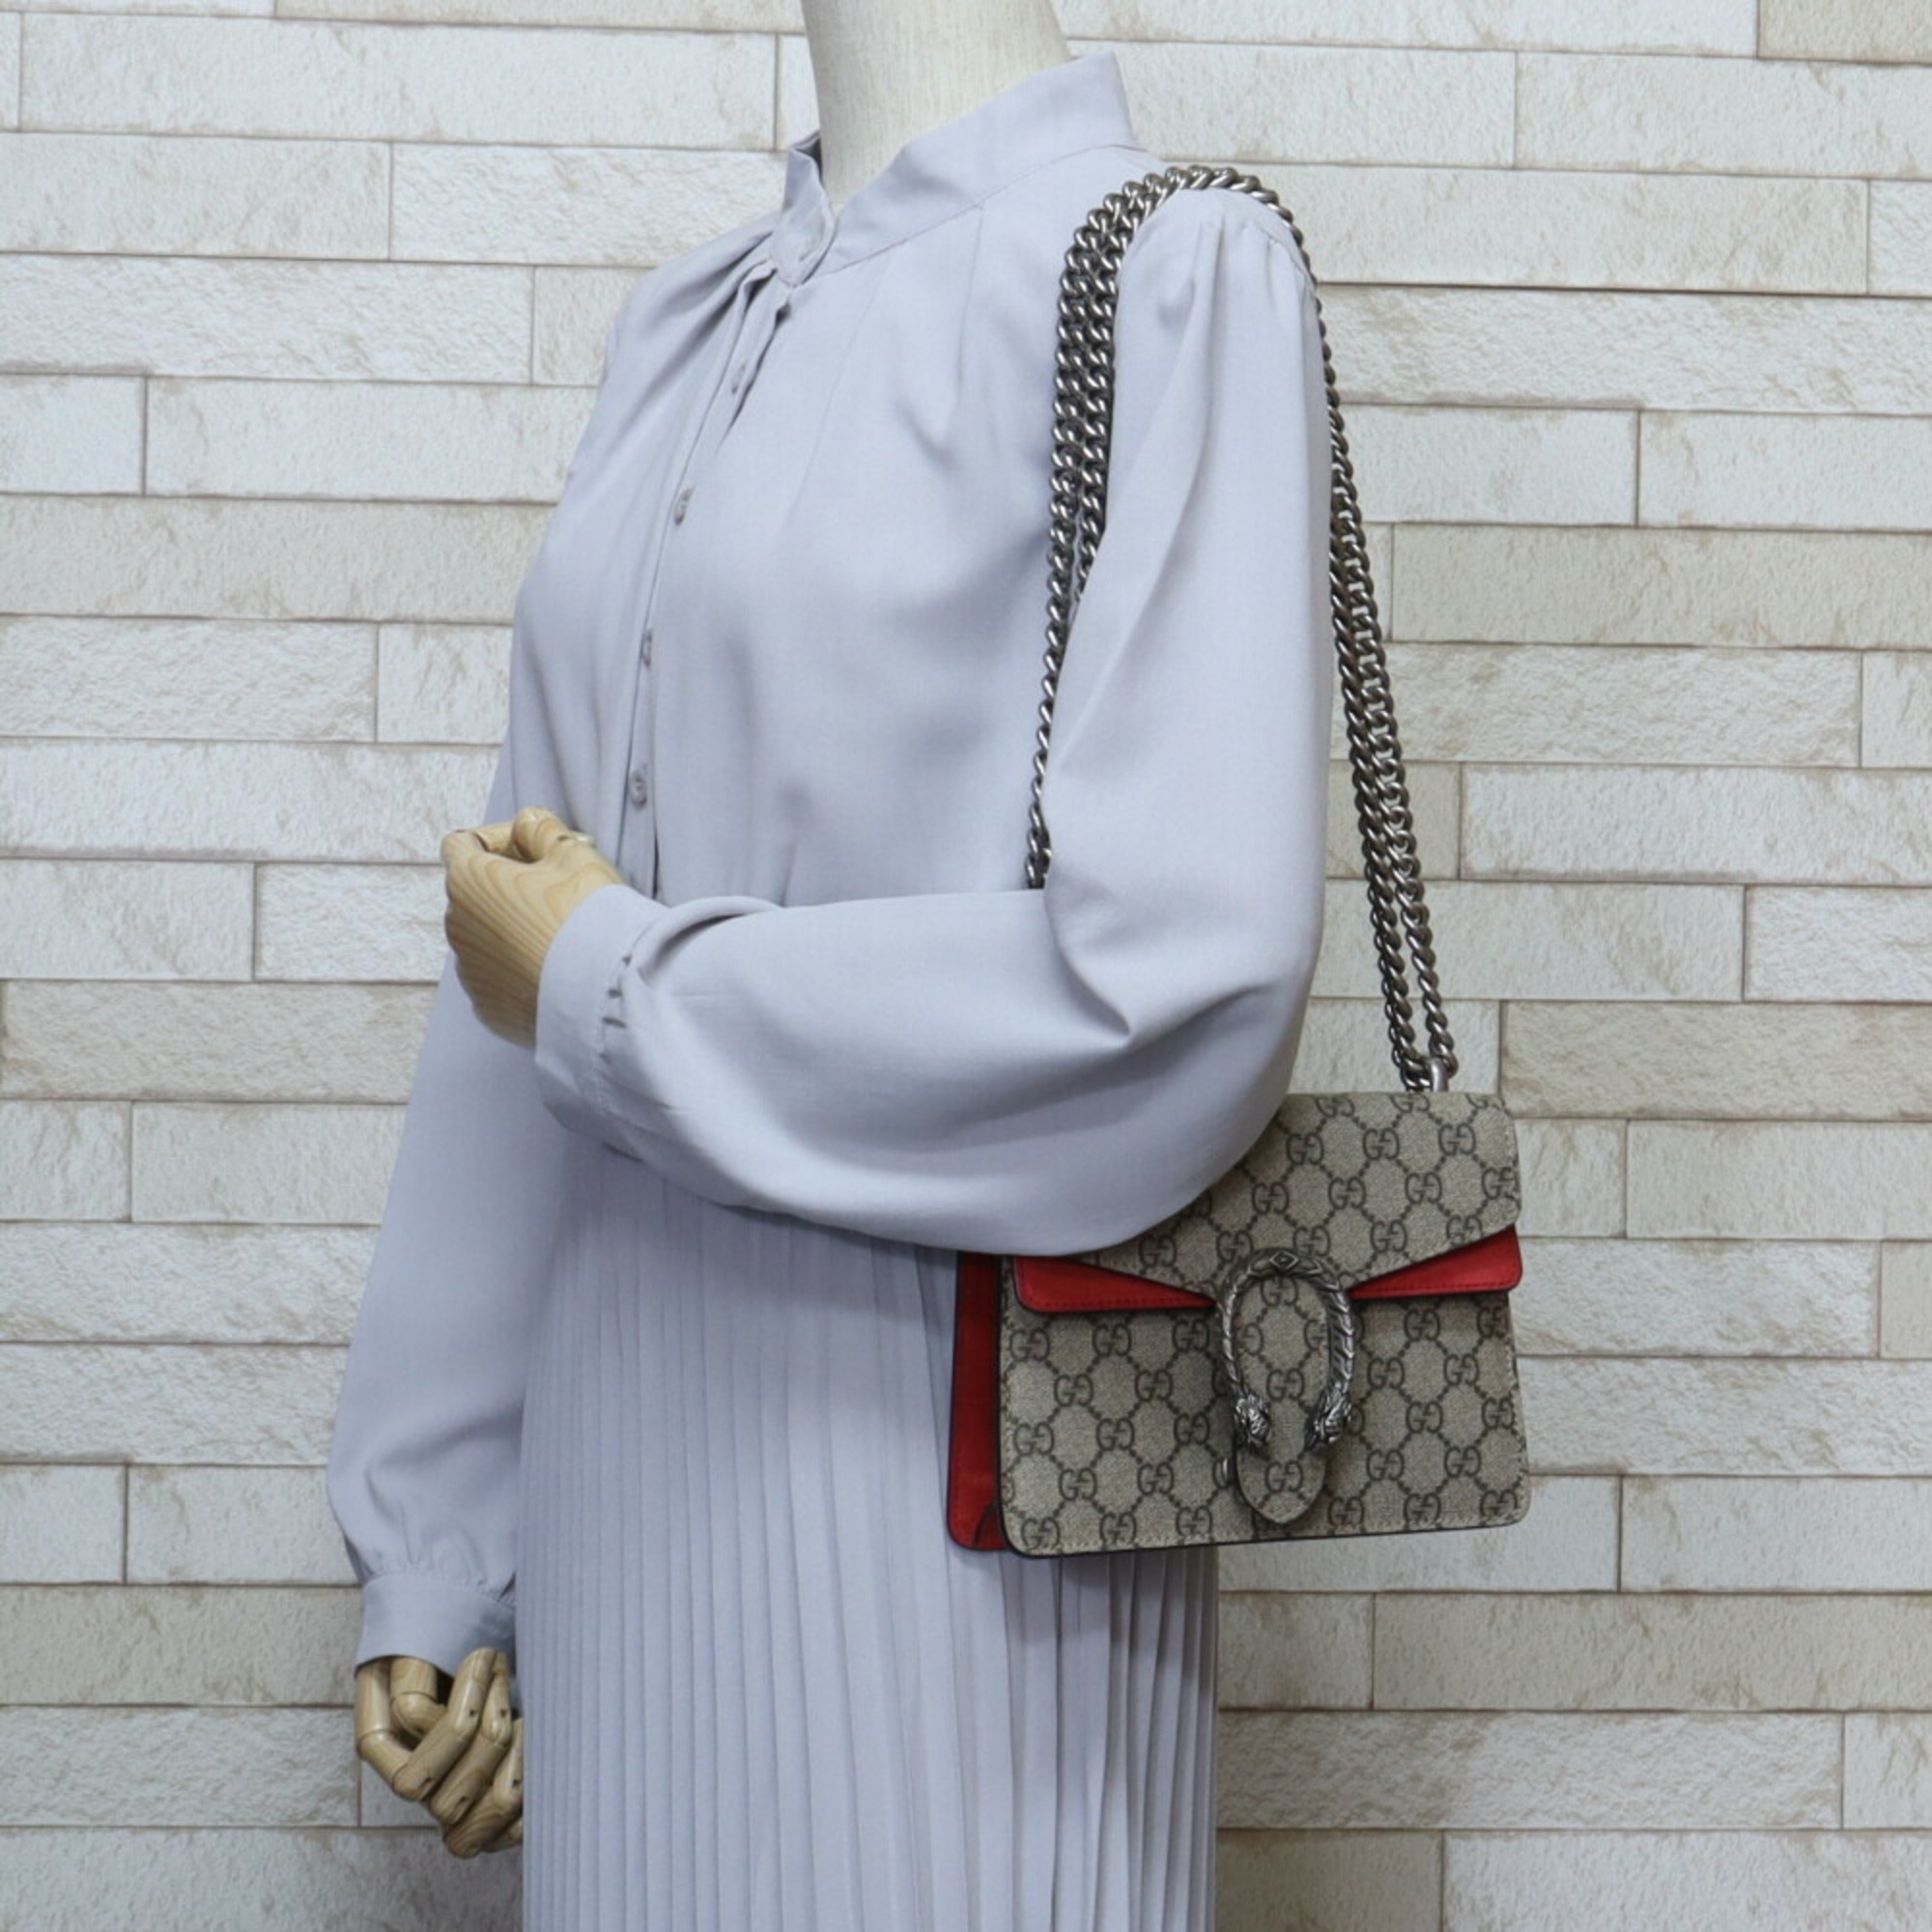 Gucci GUCCI Dionysus GG Supreme Shoulder Bag Canvas Beige Ladies